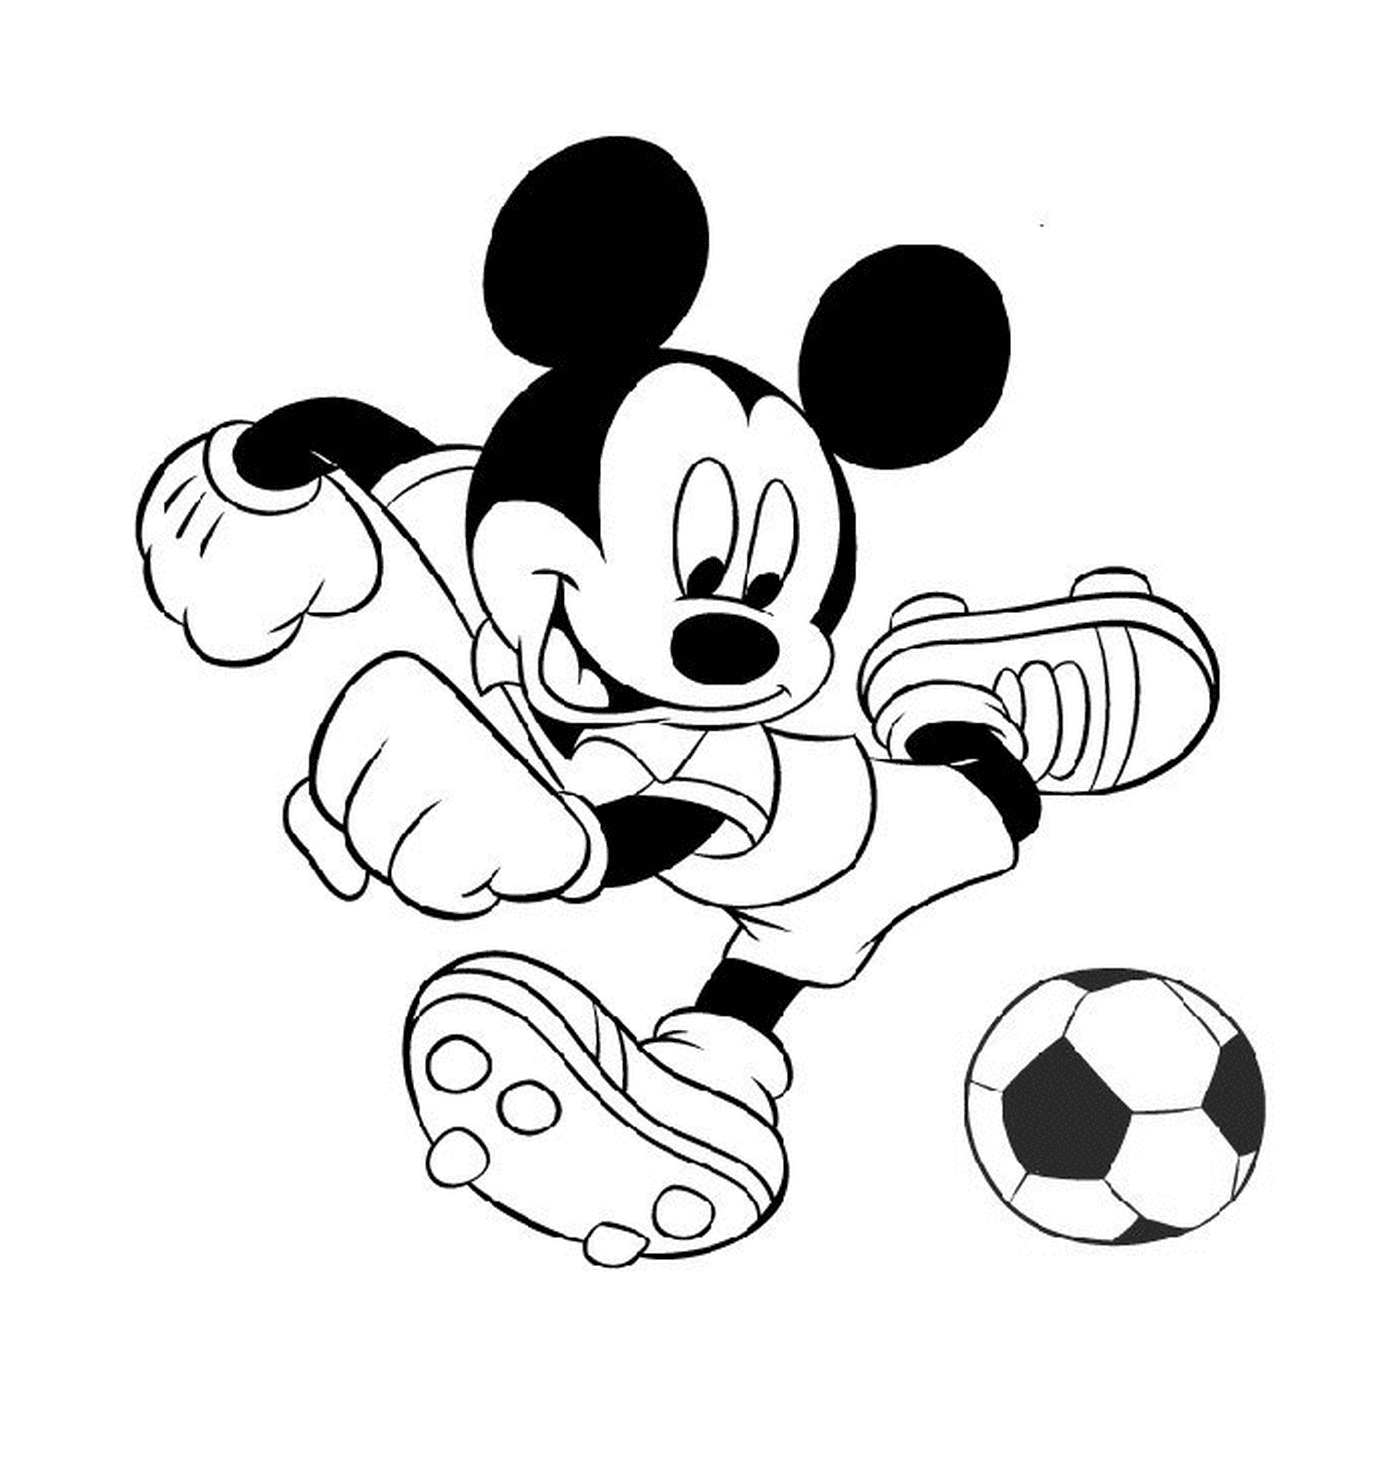  Mickey踢足球:踢足球 